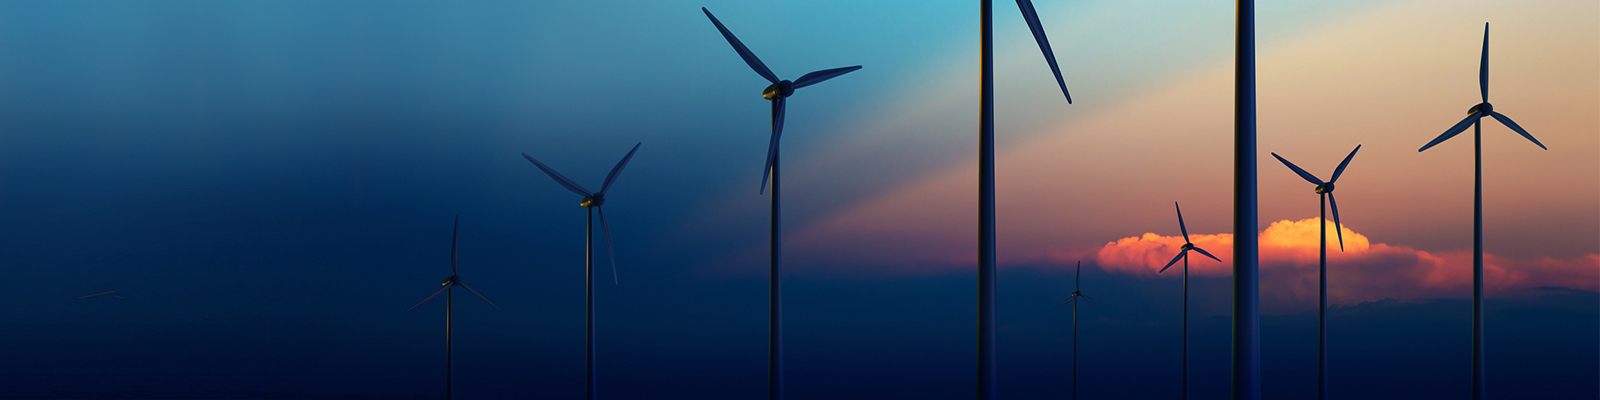 Personal banking need stock photo wind turbine farm at sunset 